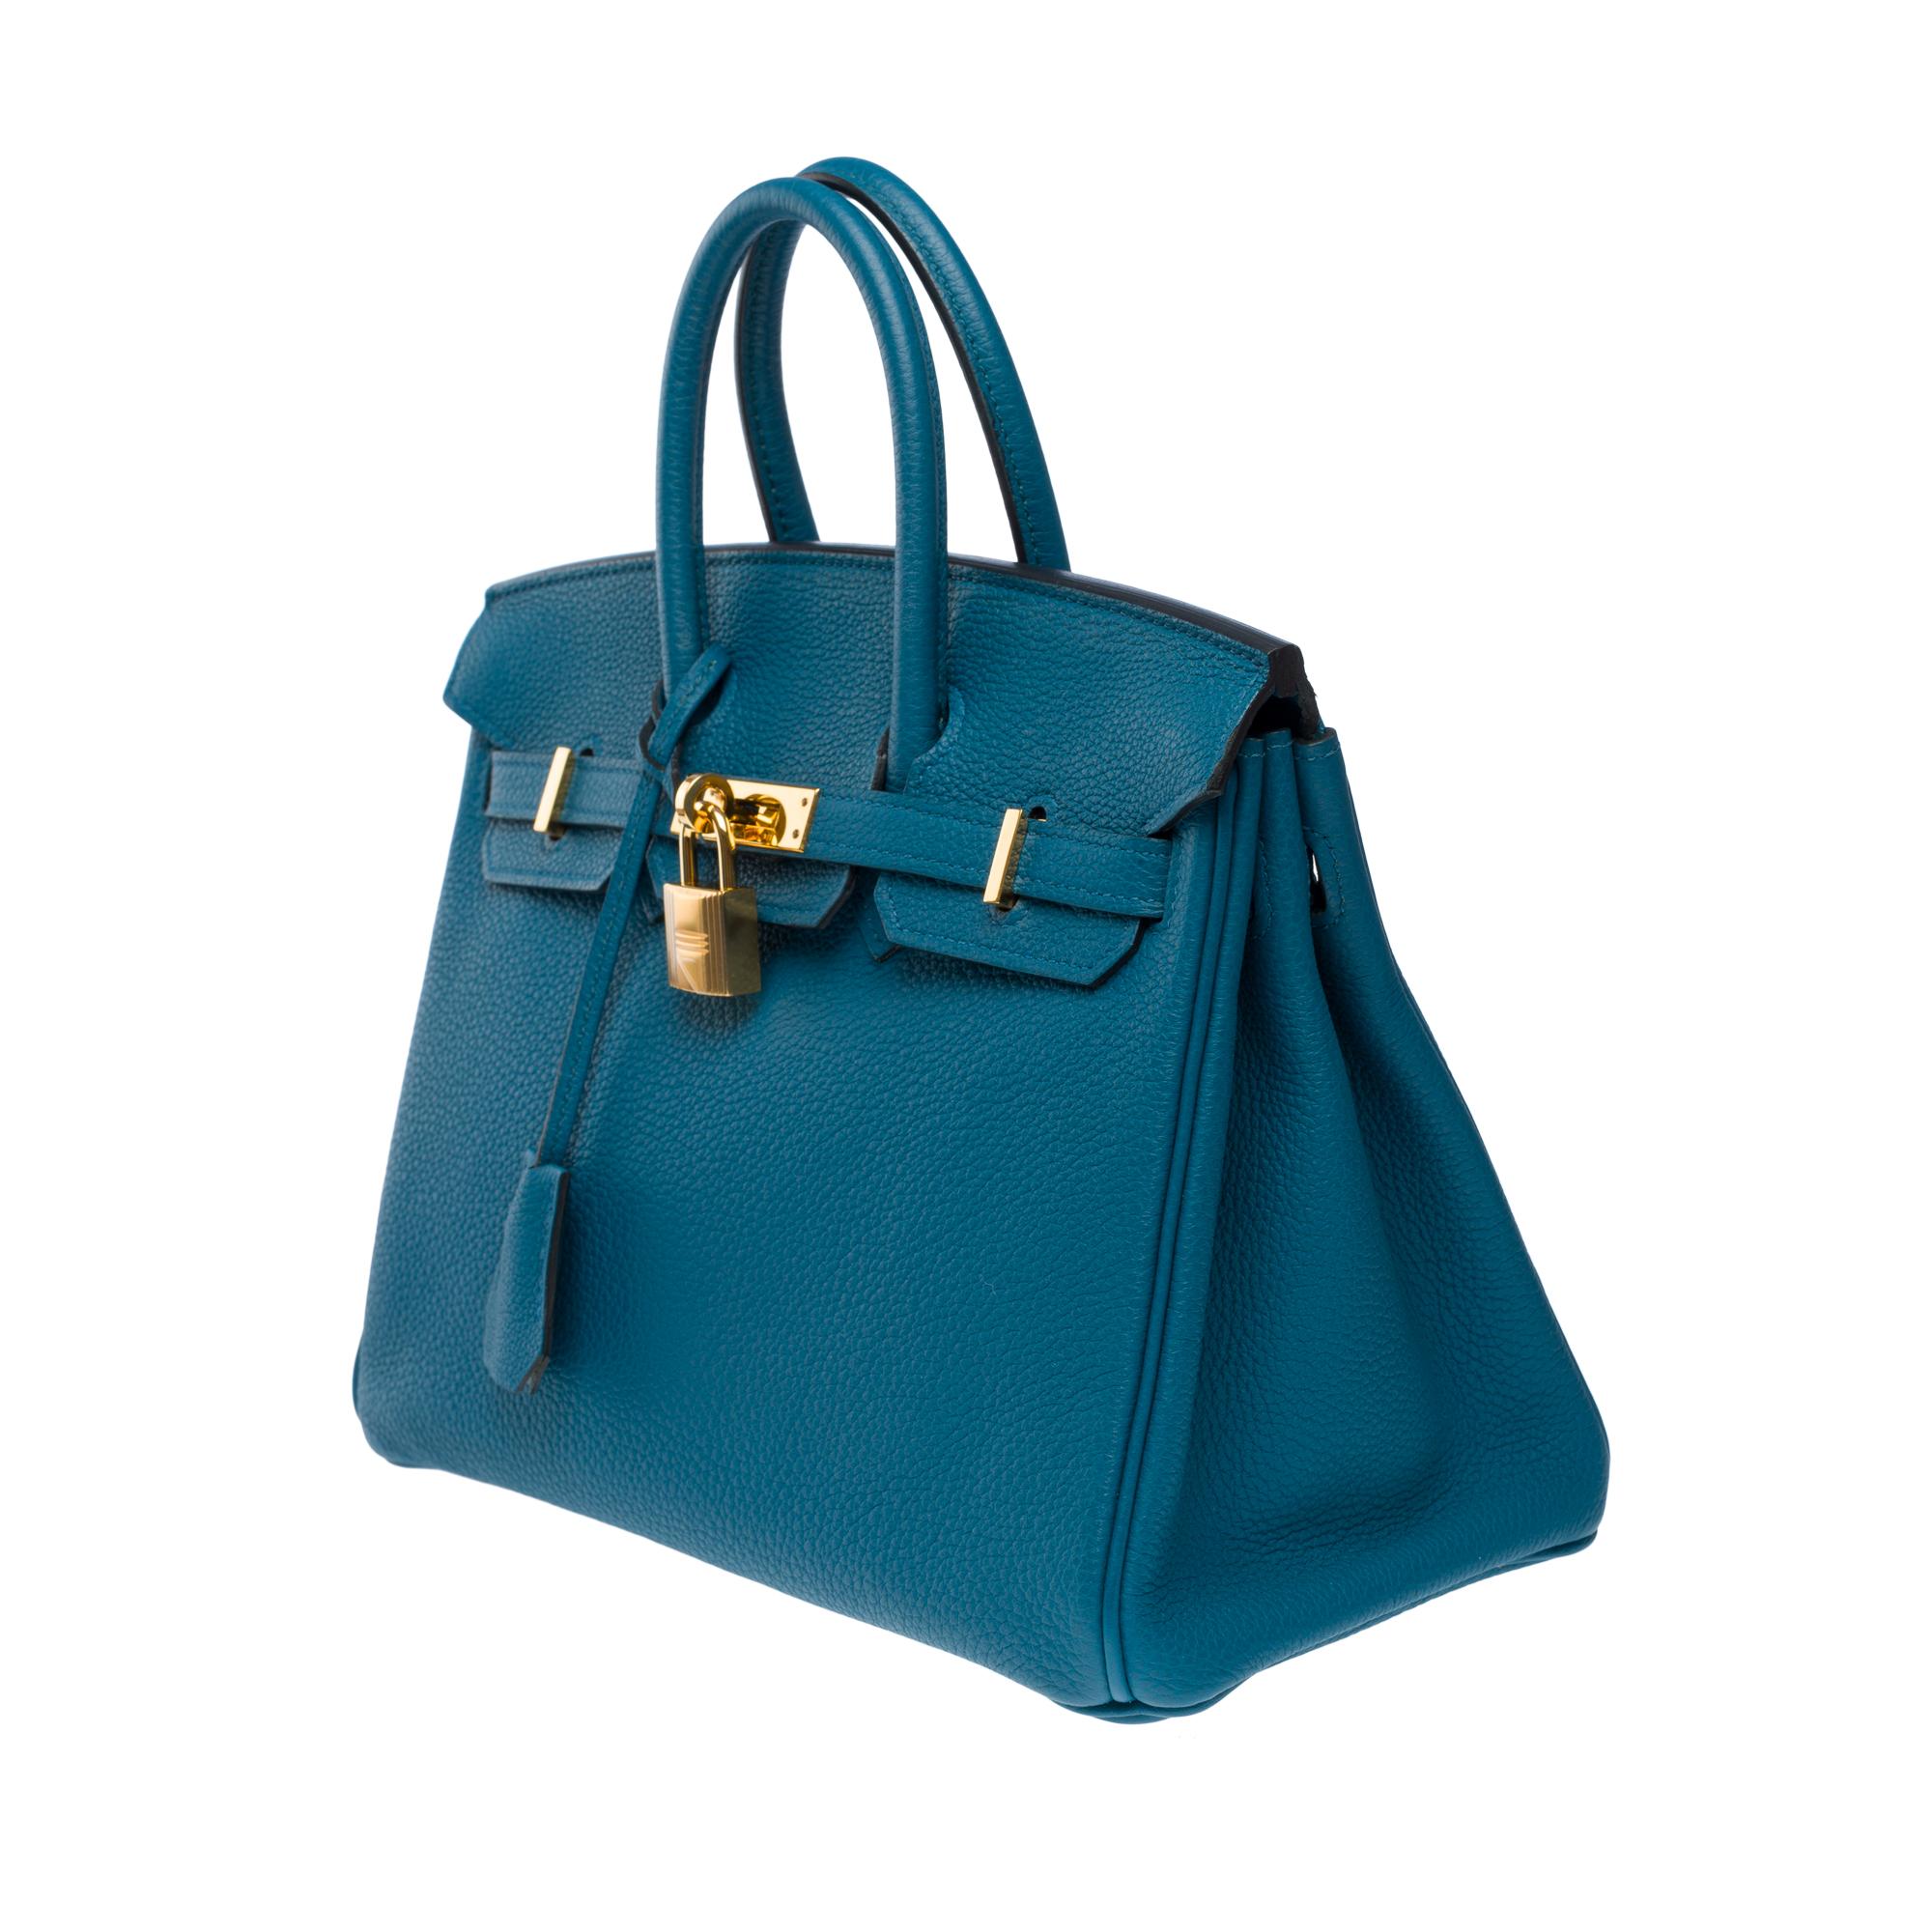 Magnifique sac à main Birkin 25 cm en cuir bleu cobalt Togo, GHW en vente 2